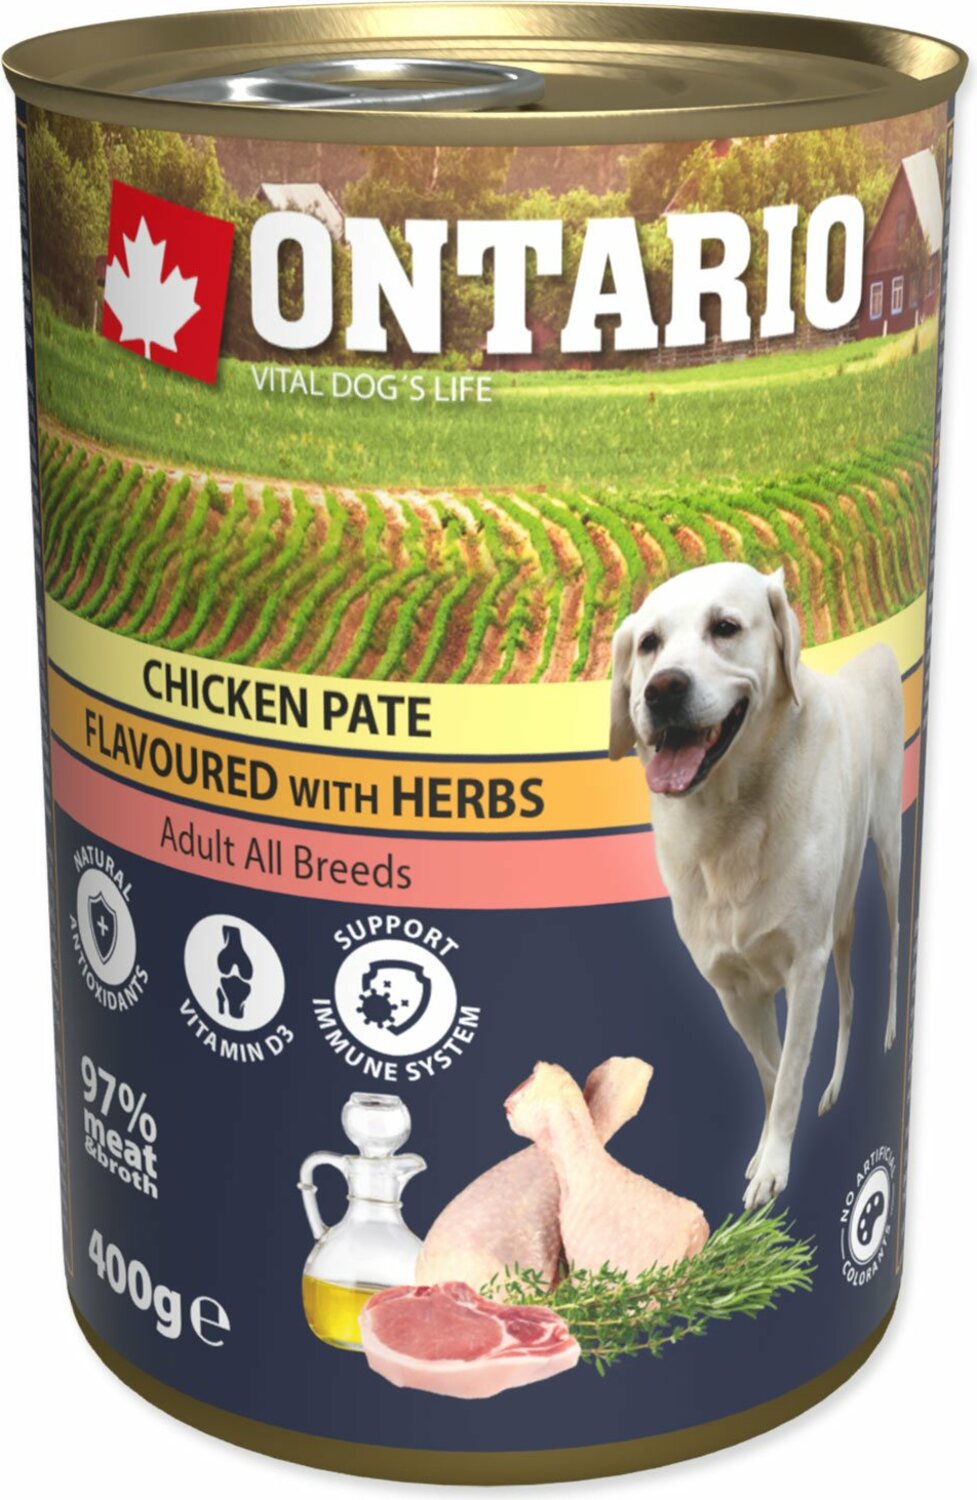 Konzerva Ontario kuře s bylinkami, paté 400g